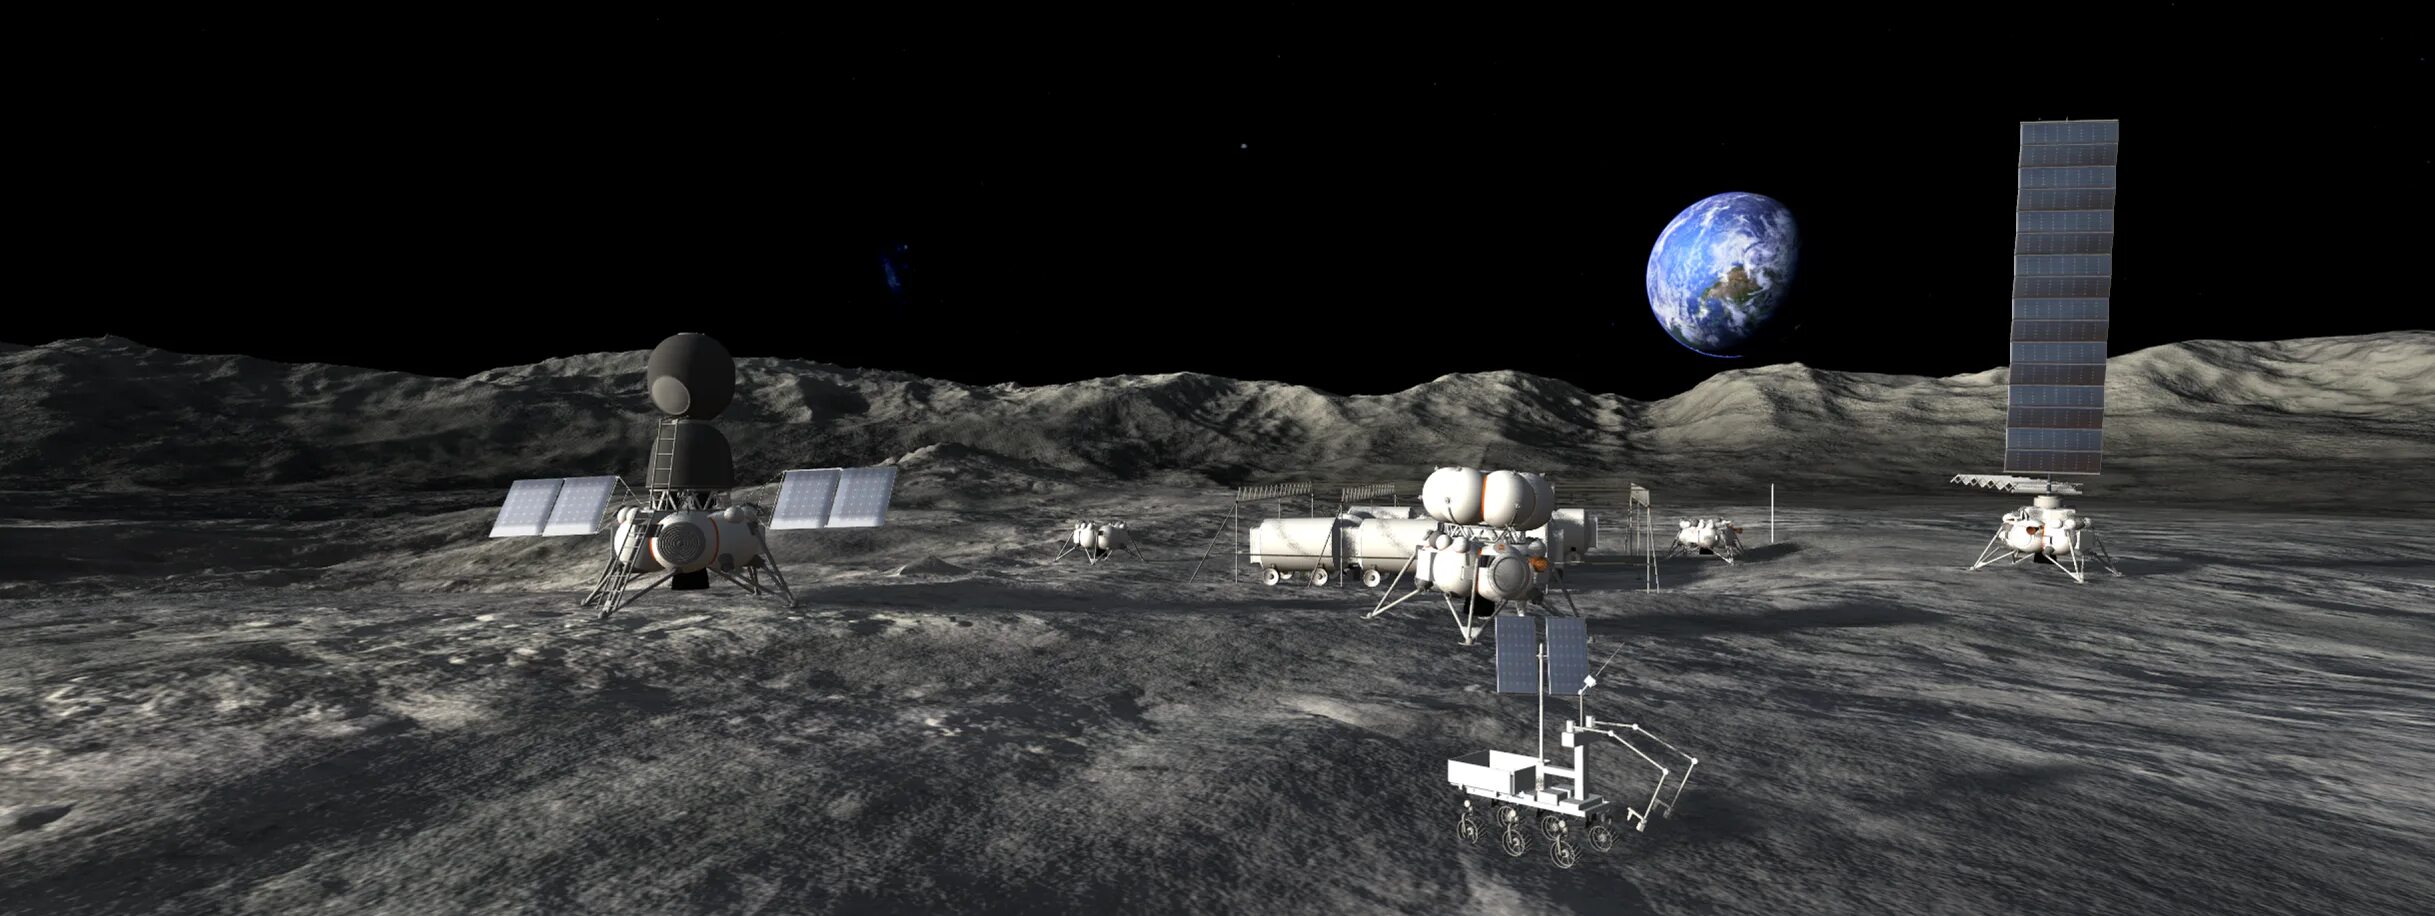 Лунная база 2020. Лин Индастриал Лунная база. Проект лунной базы. Космическая станция на Луне. Базы на Луне.